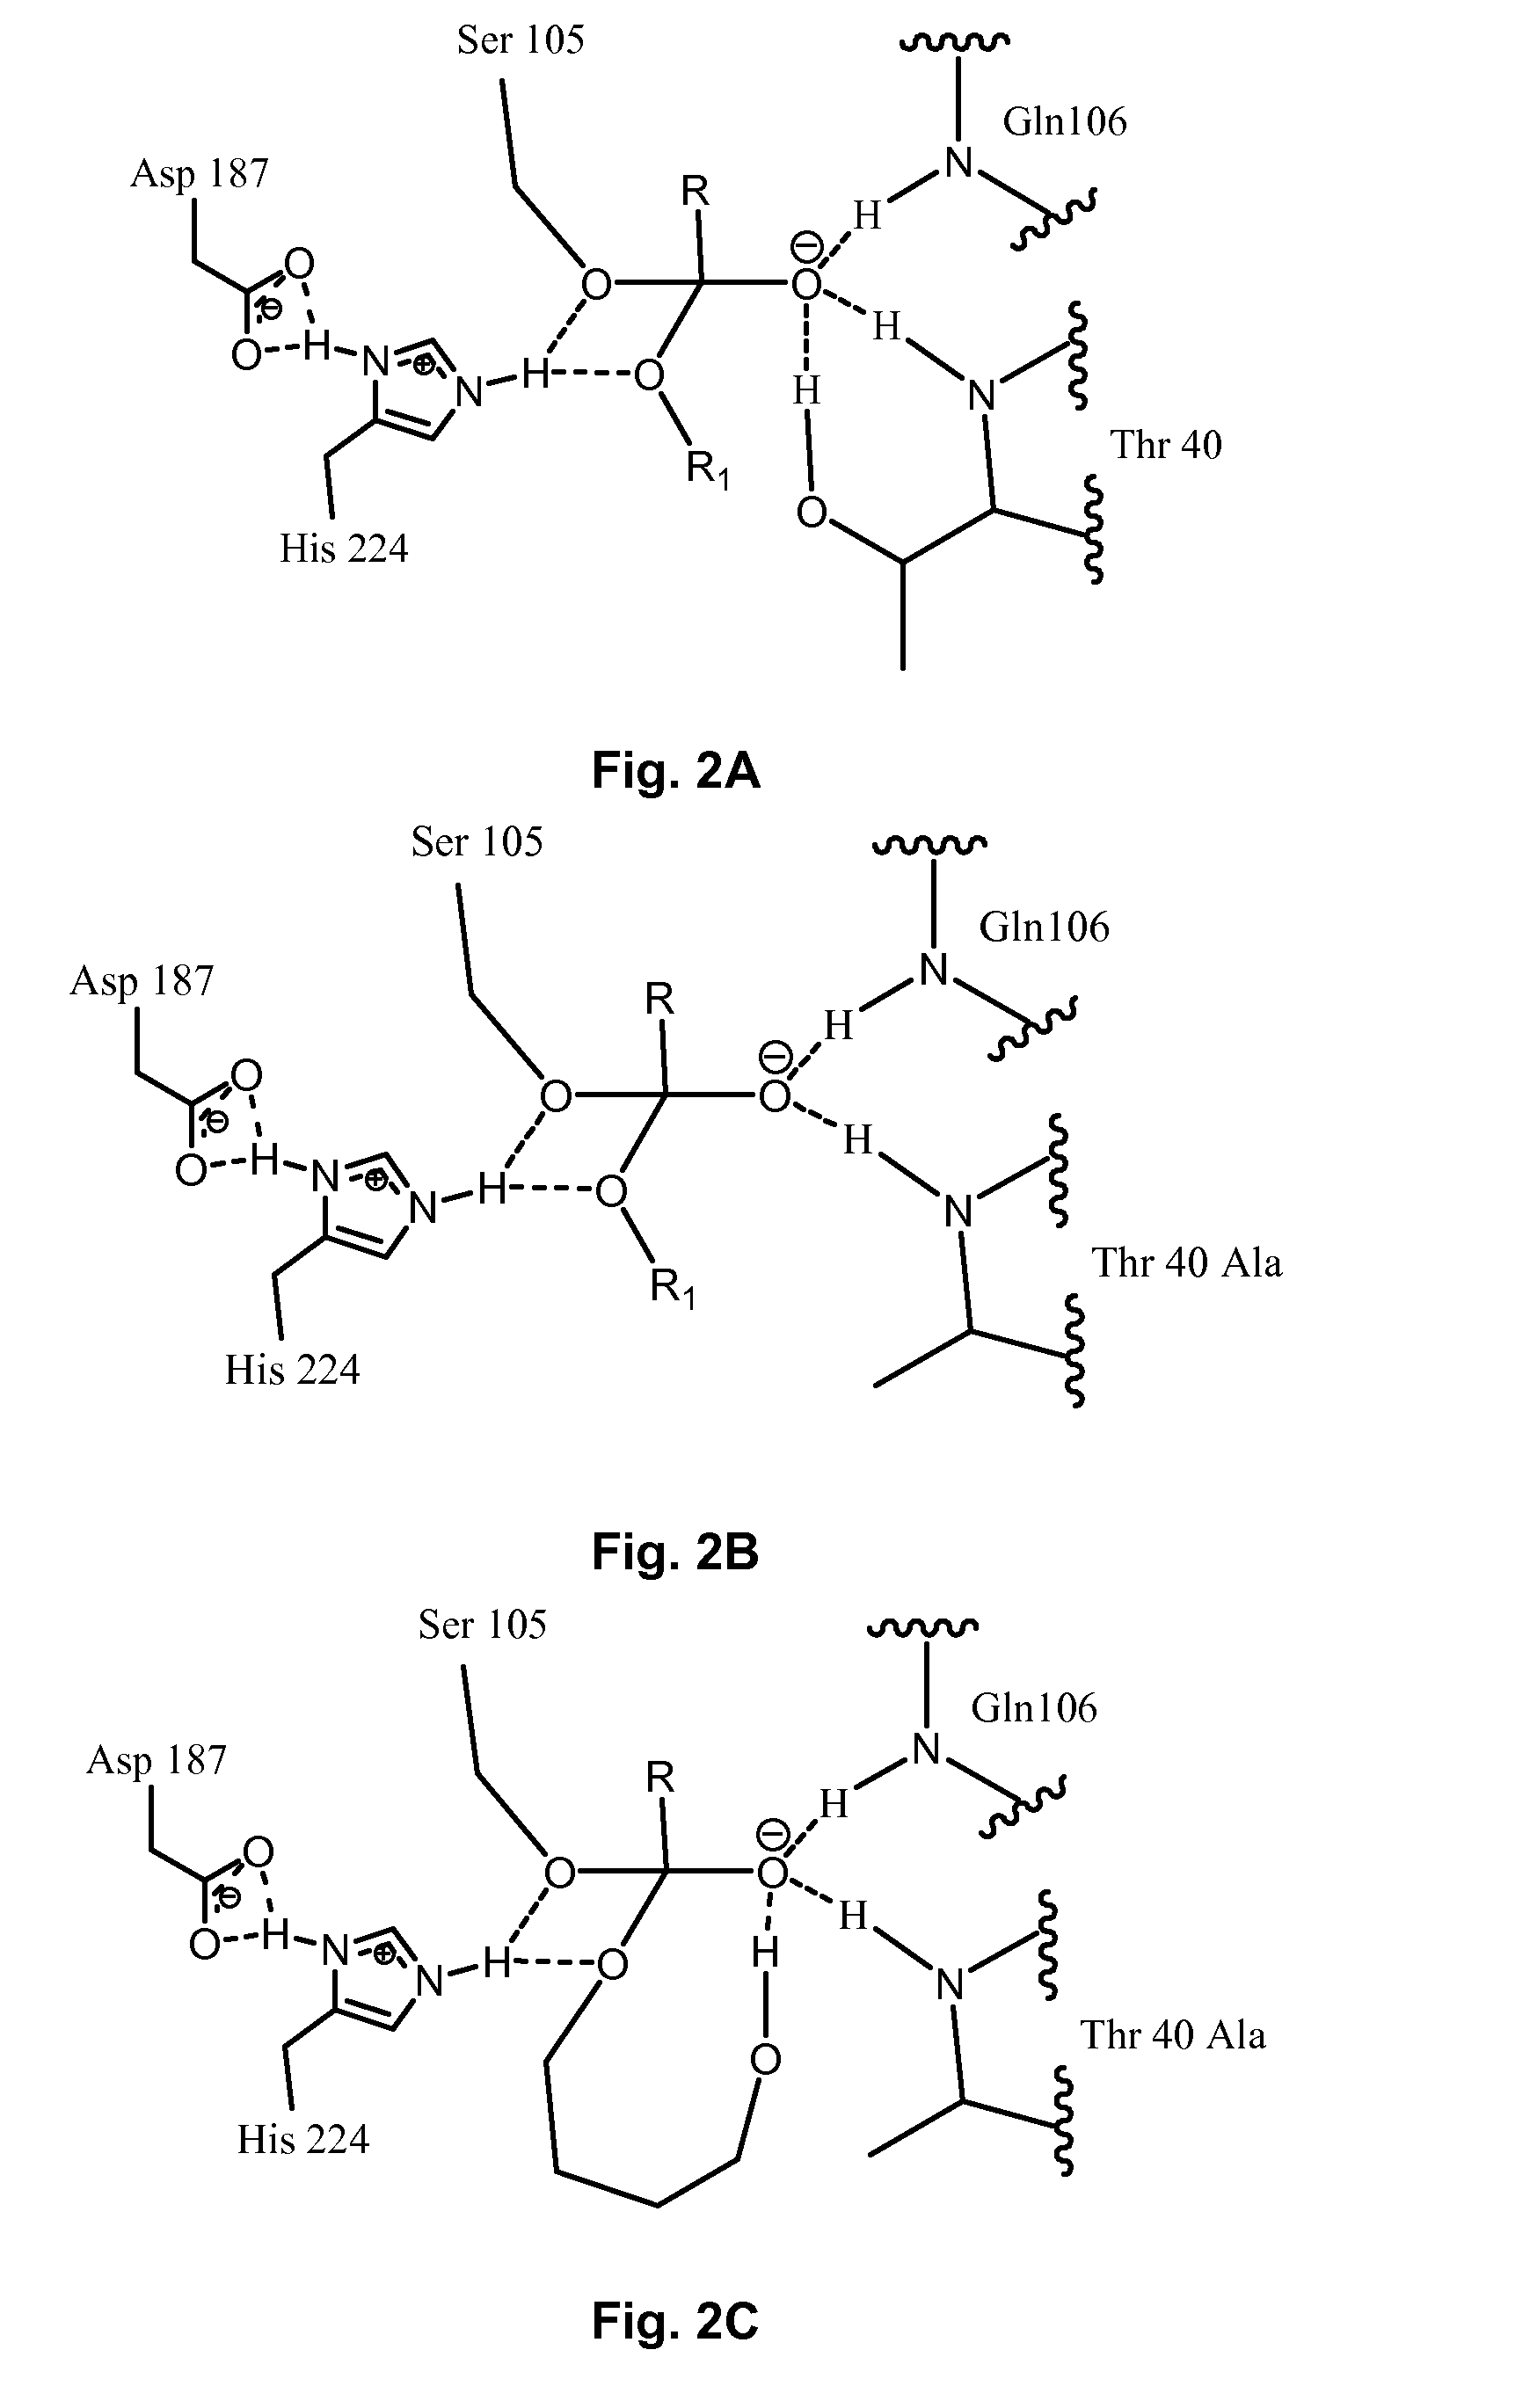 Enzymatically catalyzed method of preparing mono-acylated polyols